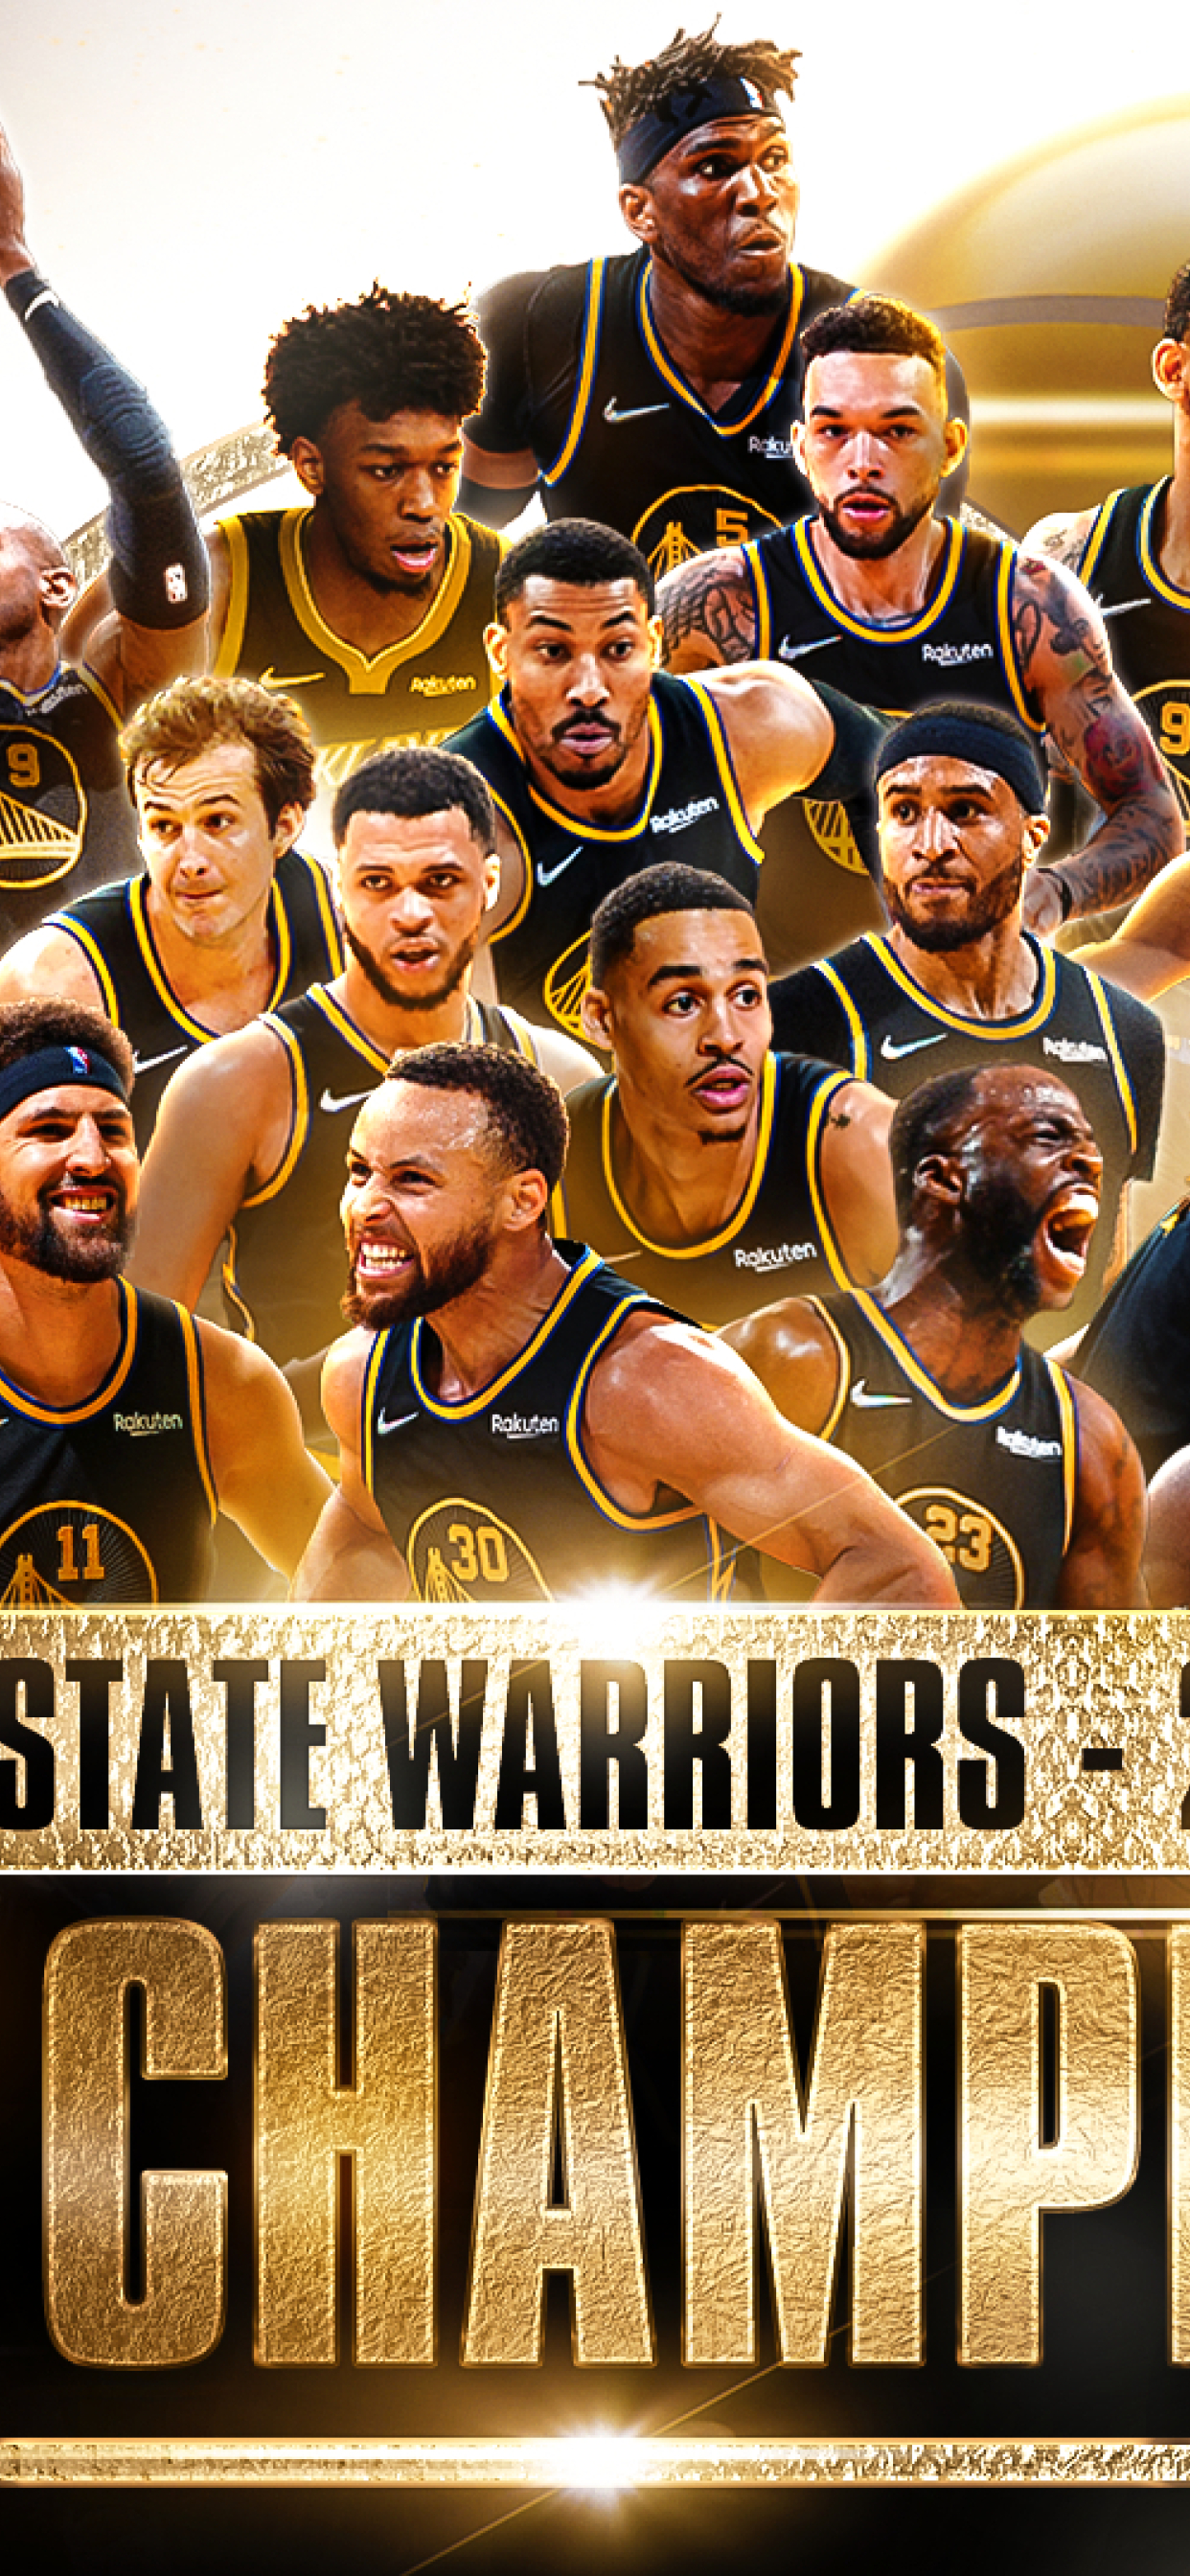 Golden State Warriors iPhone Wallpaper 71 images